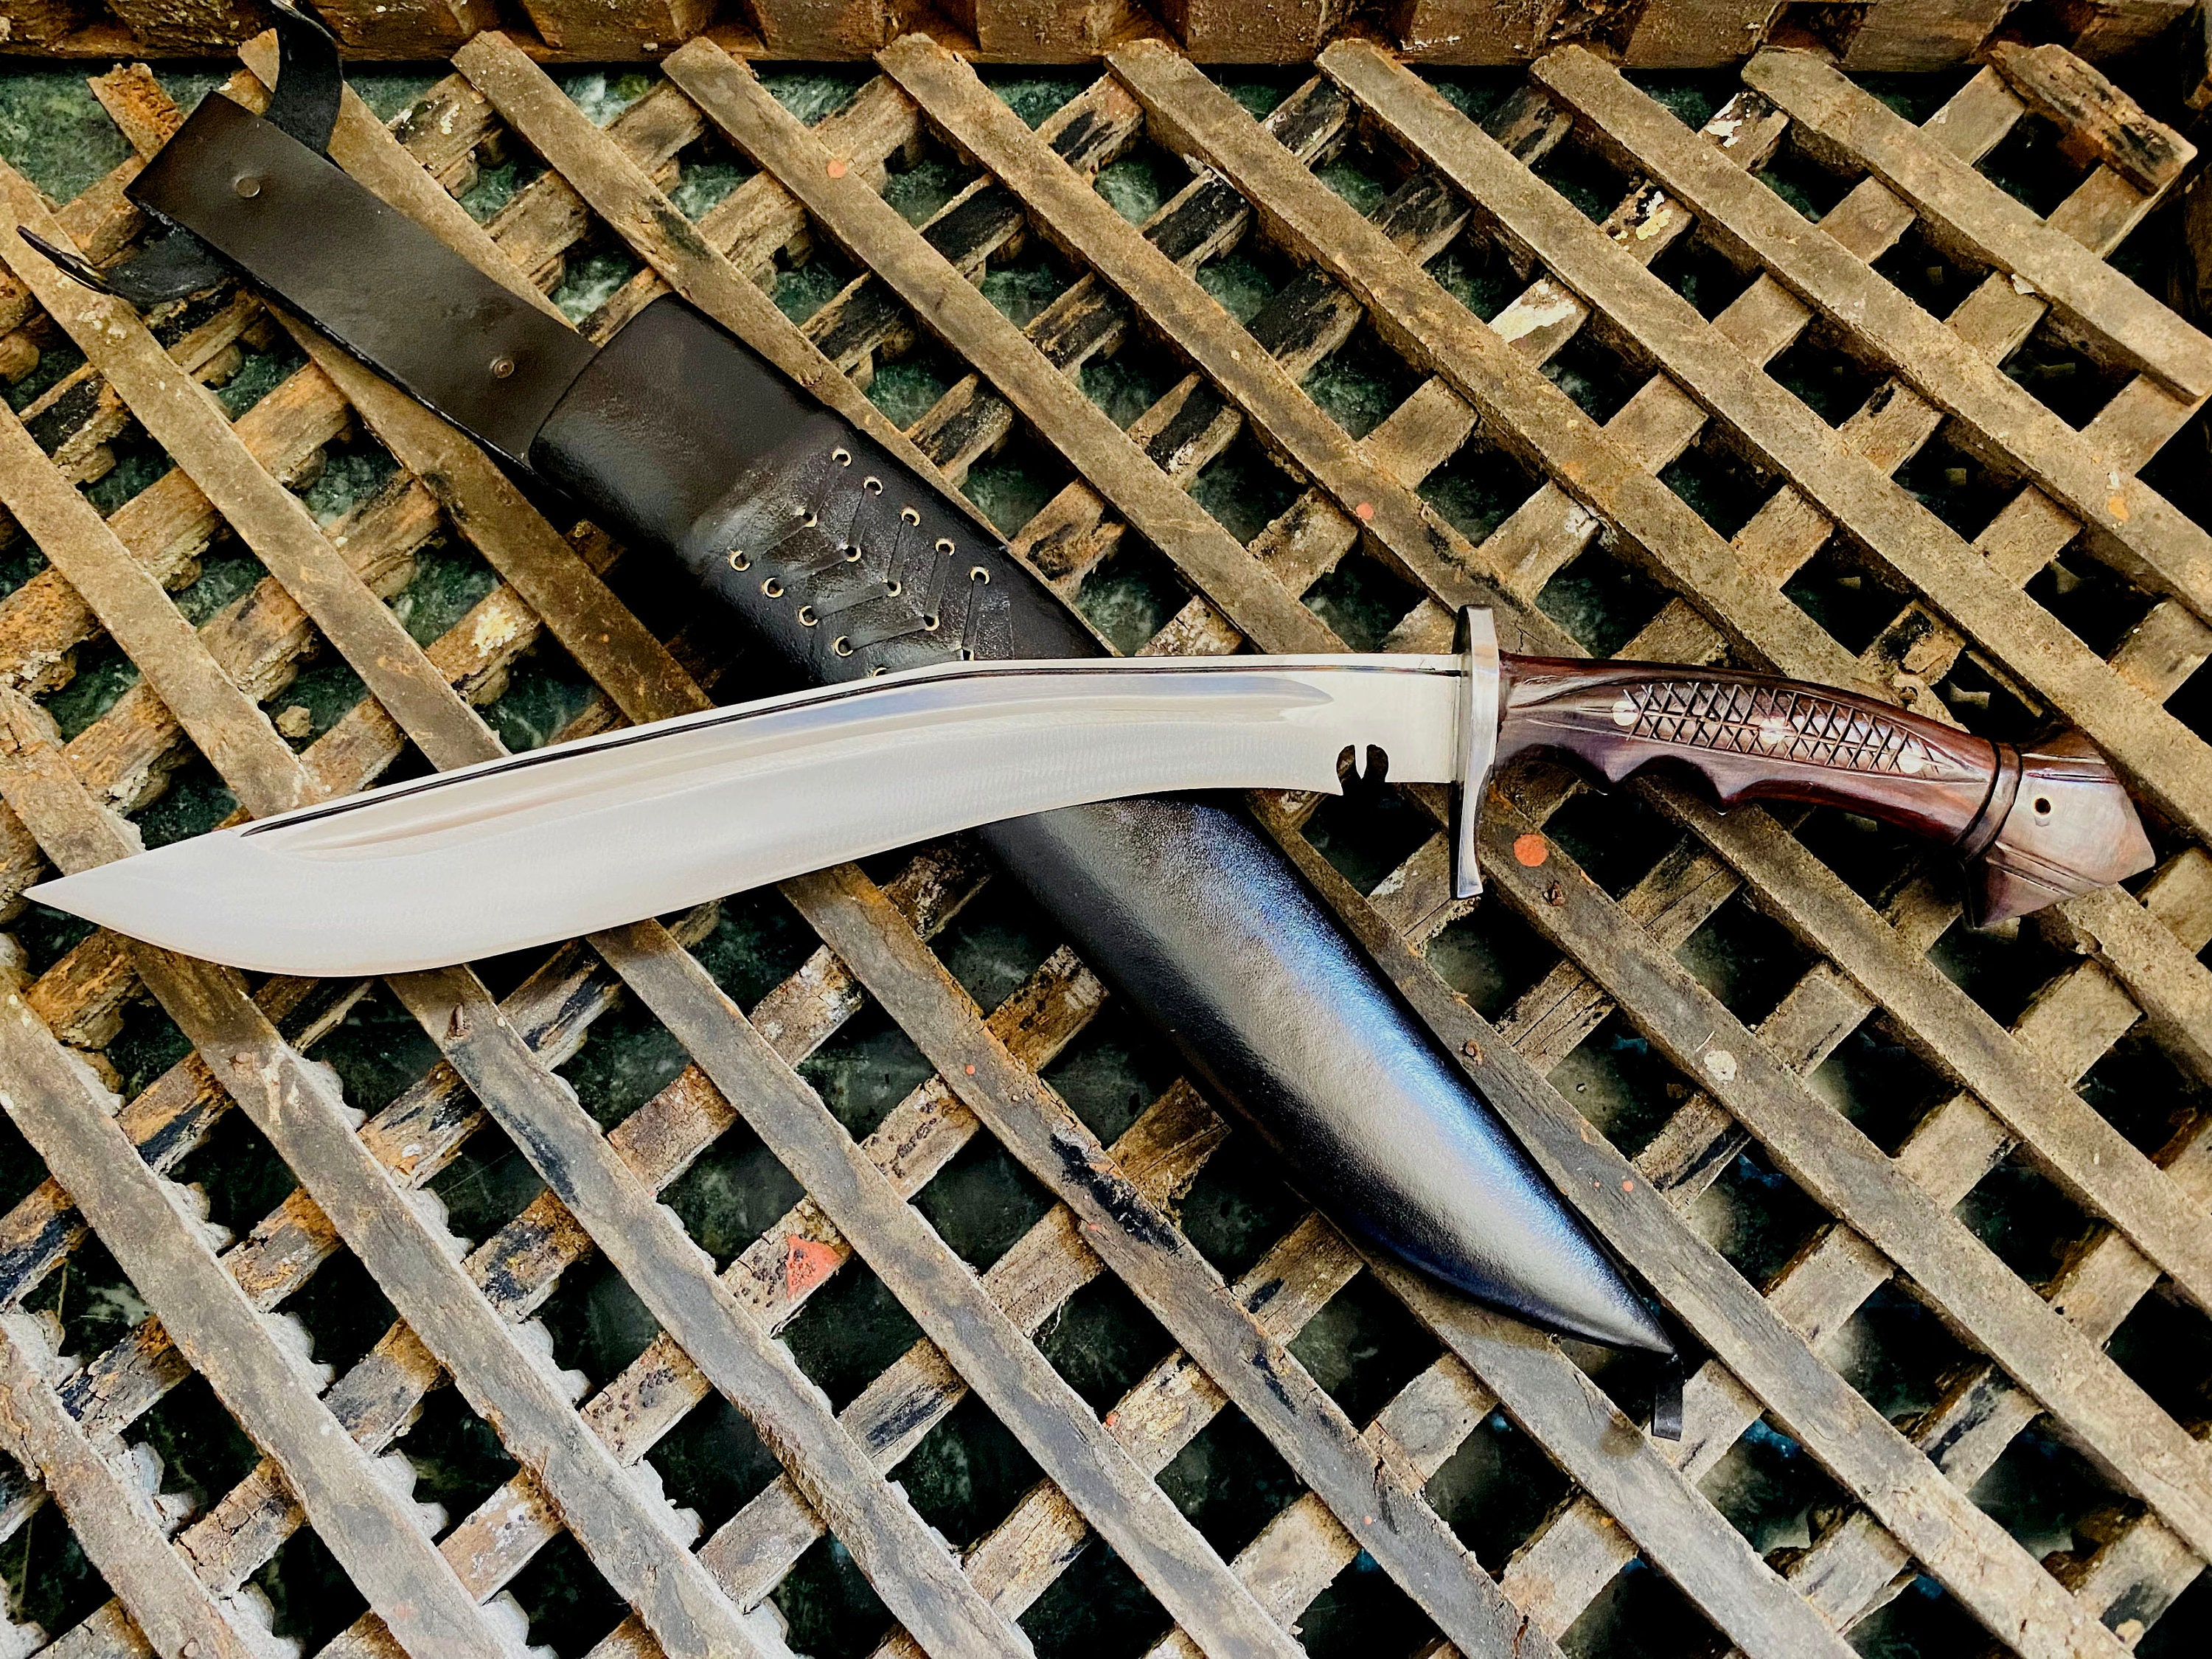 Knife, 2-Piece Set Kukri knife Hand forged kitchen knife Amolador